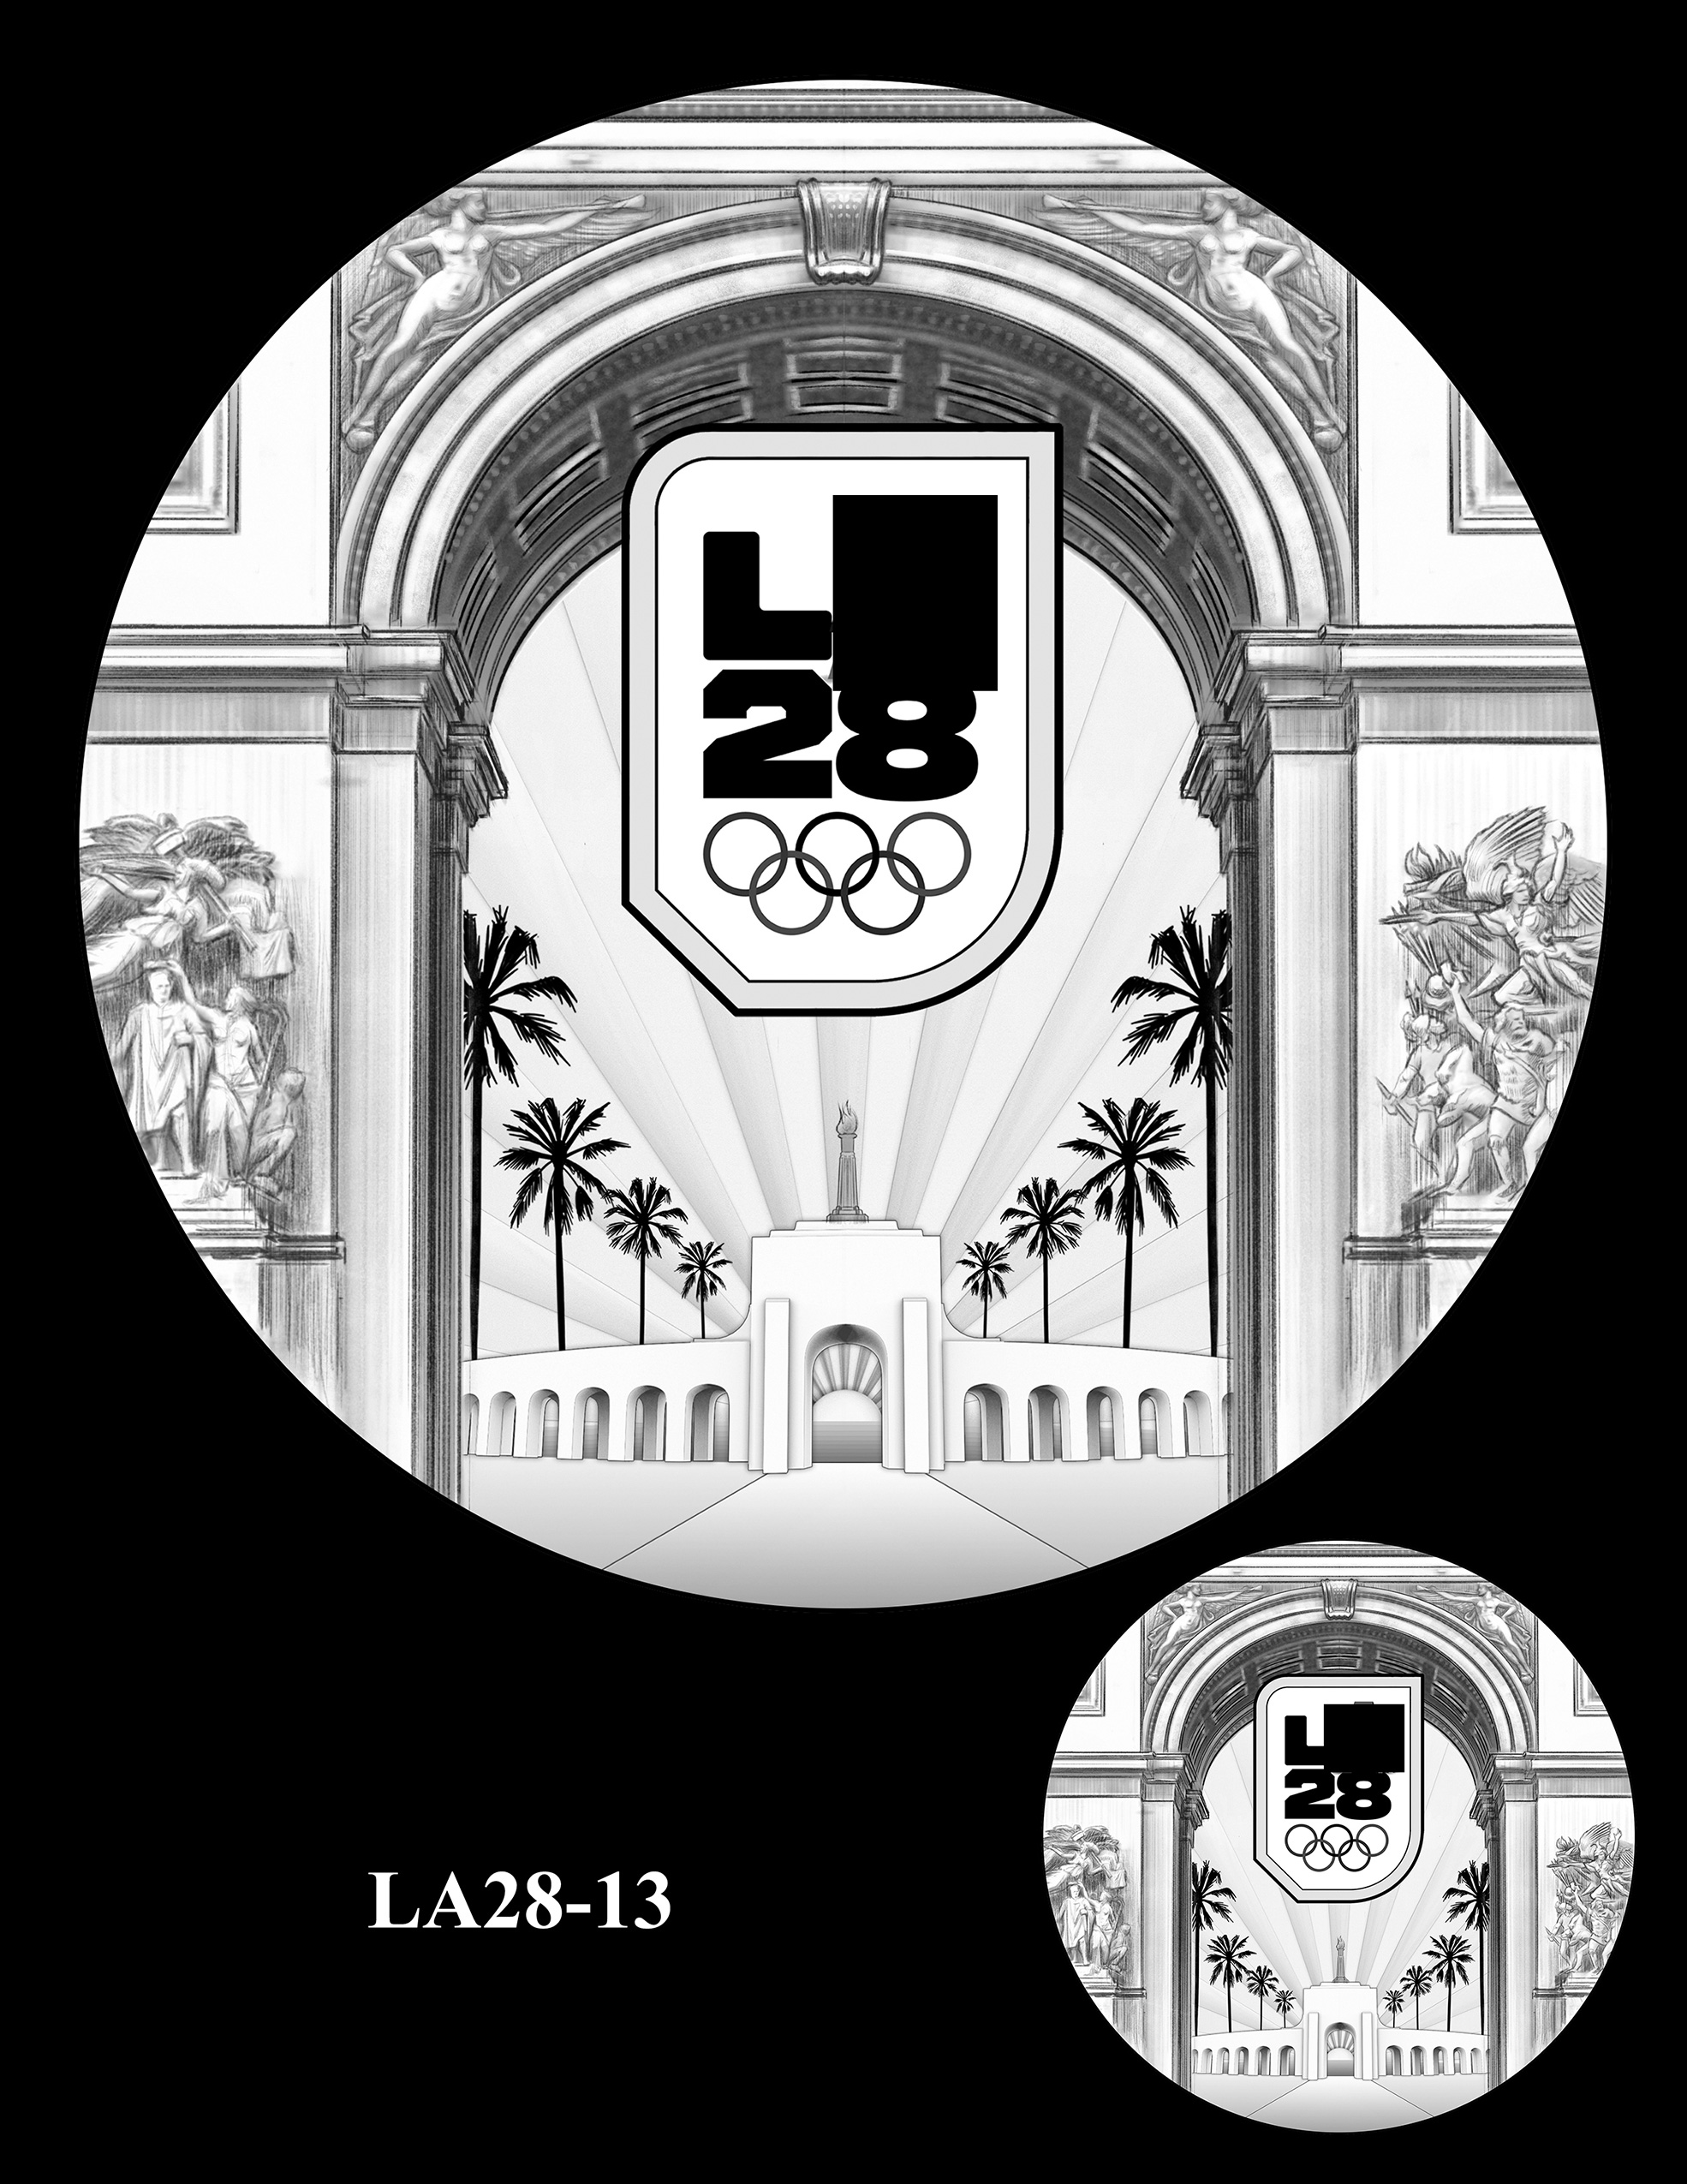 LA28-13 -- Olympics Handover Medallion